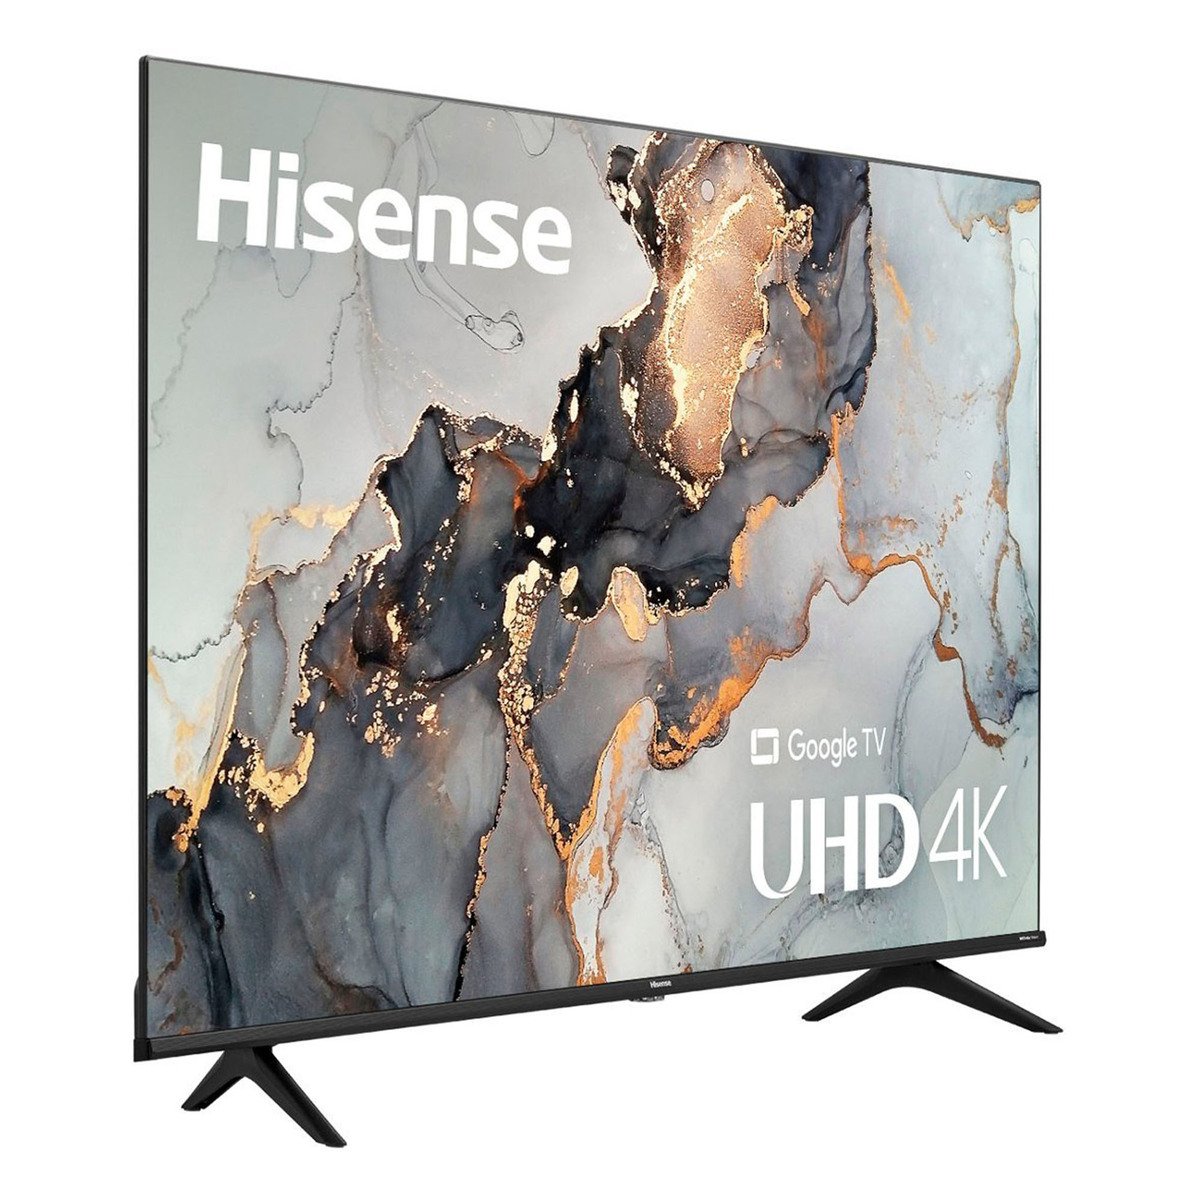 Hisense 4K SmartTV 55A6H 55 Inches